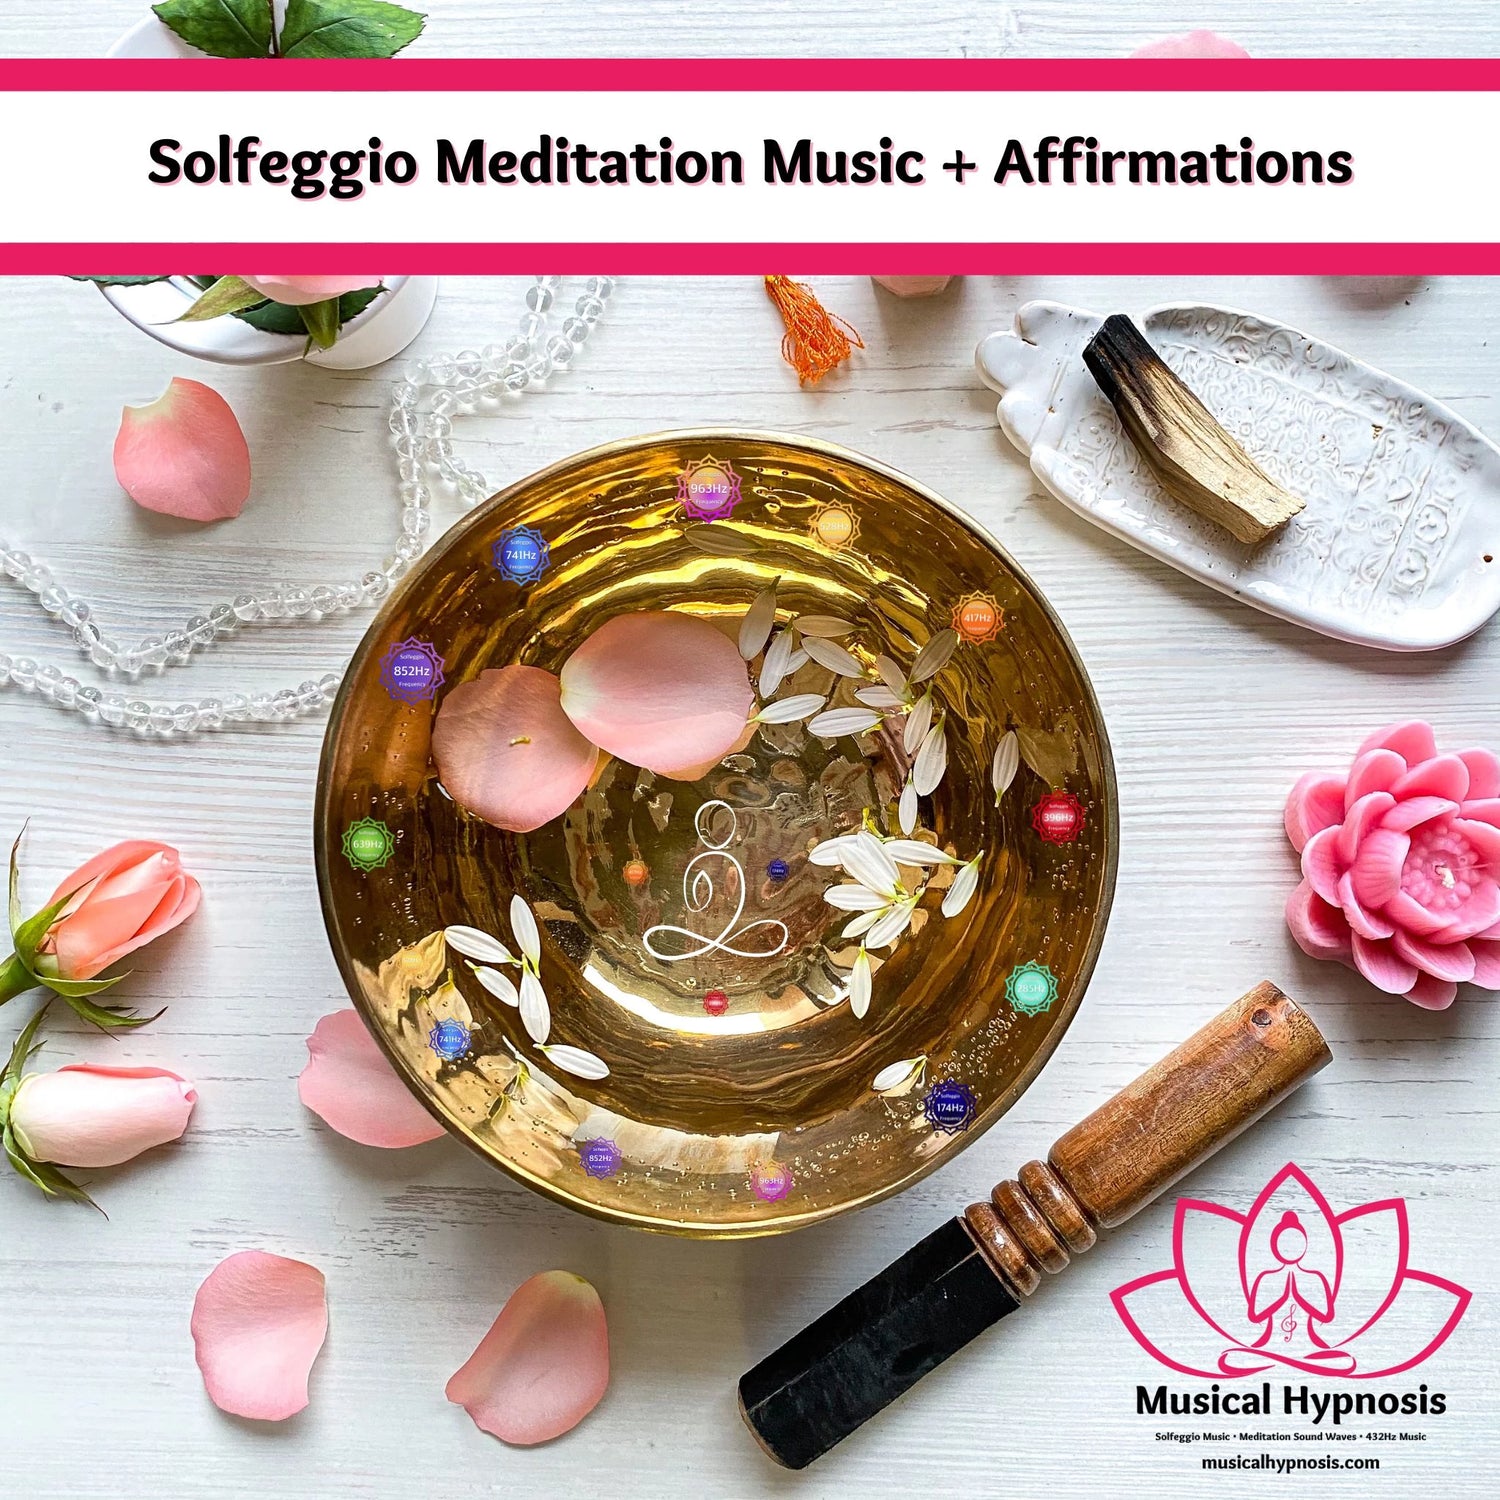 Solfeggio Meditation Music + Affirmations